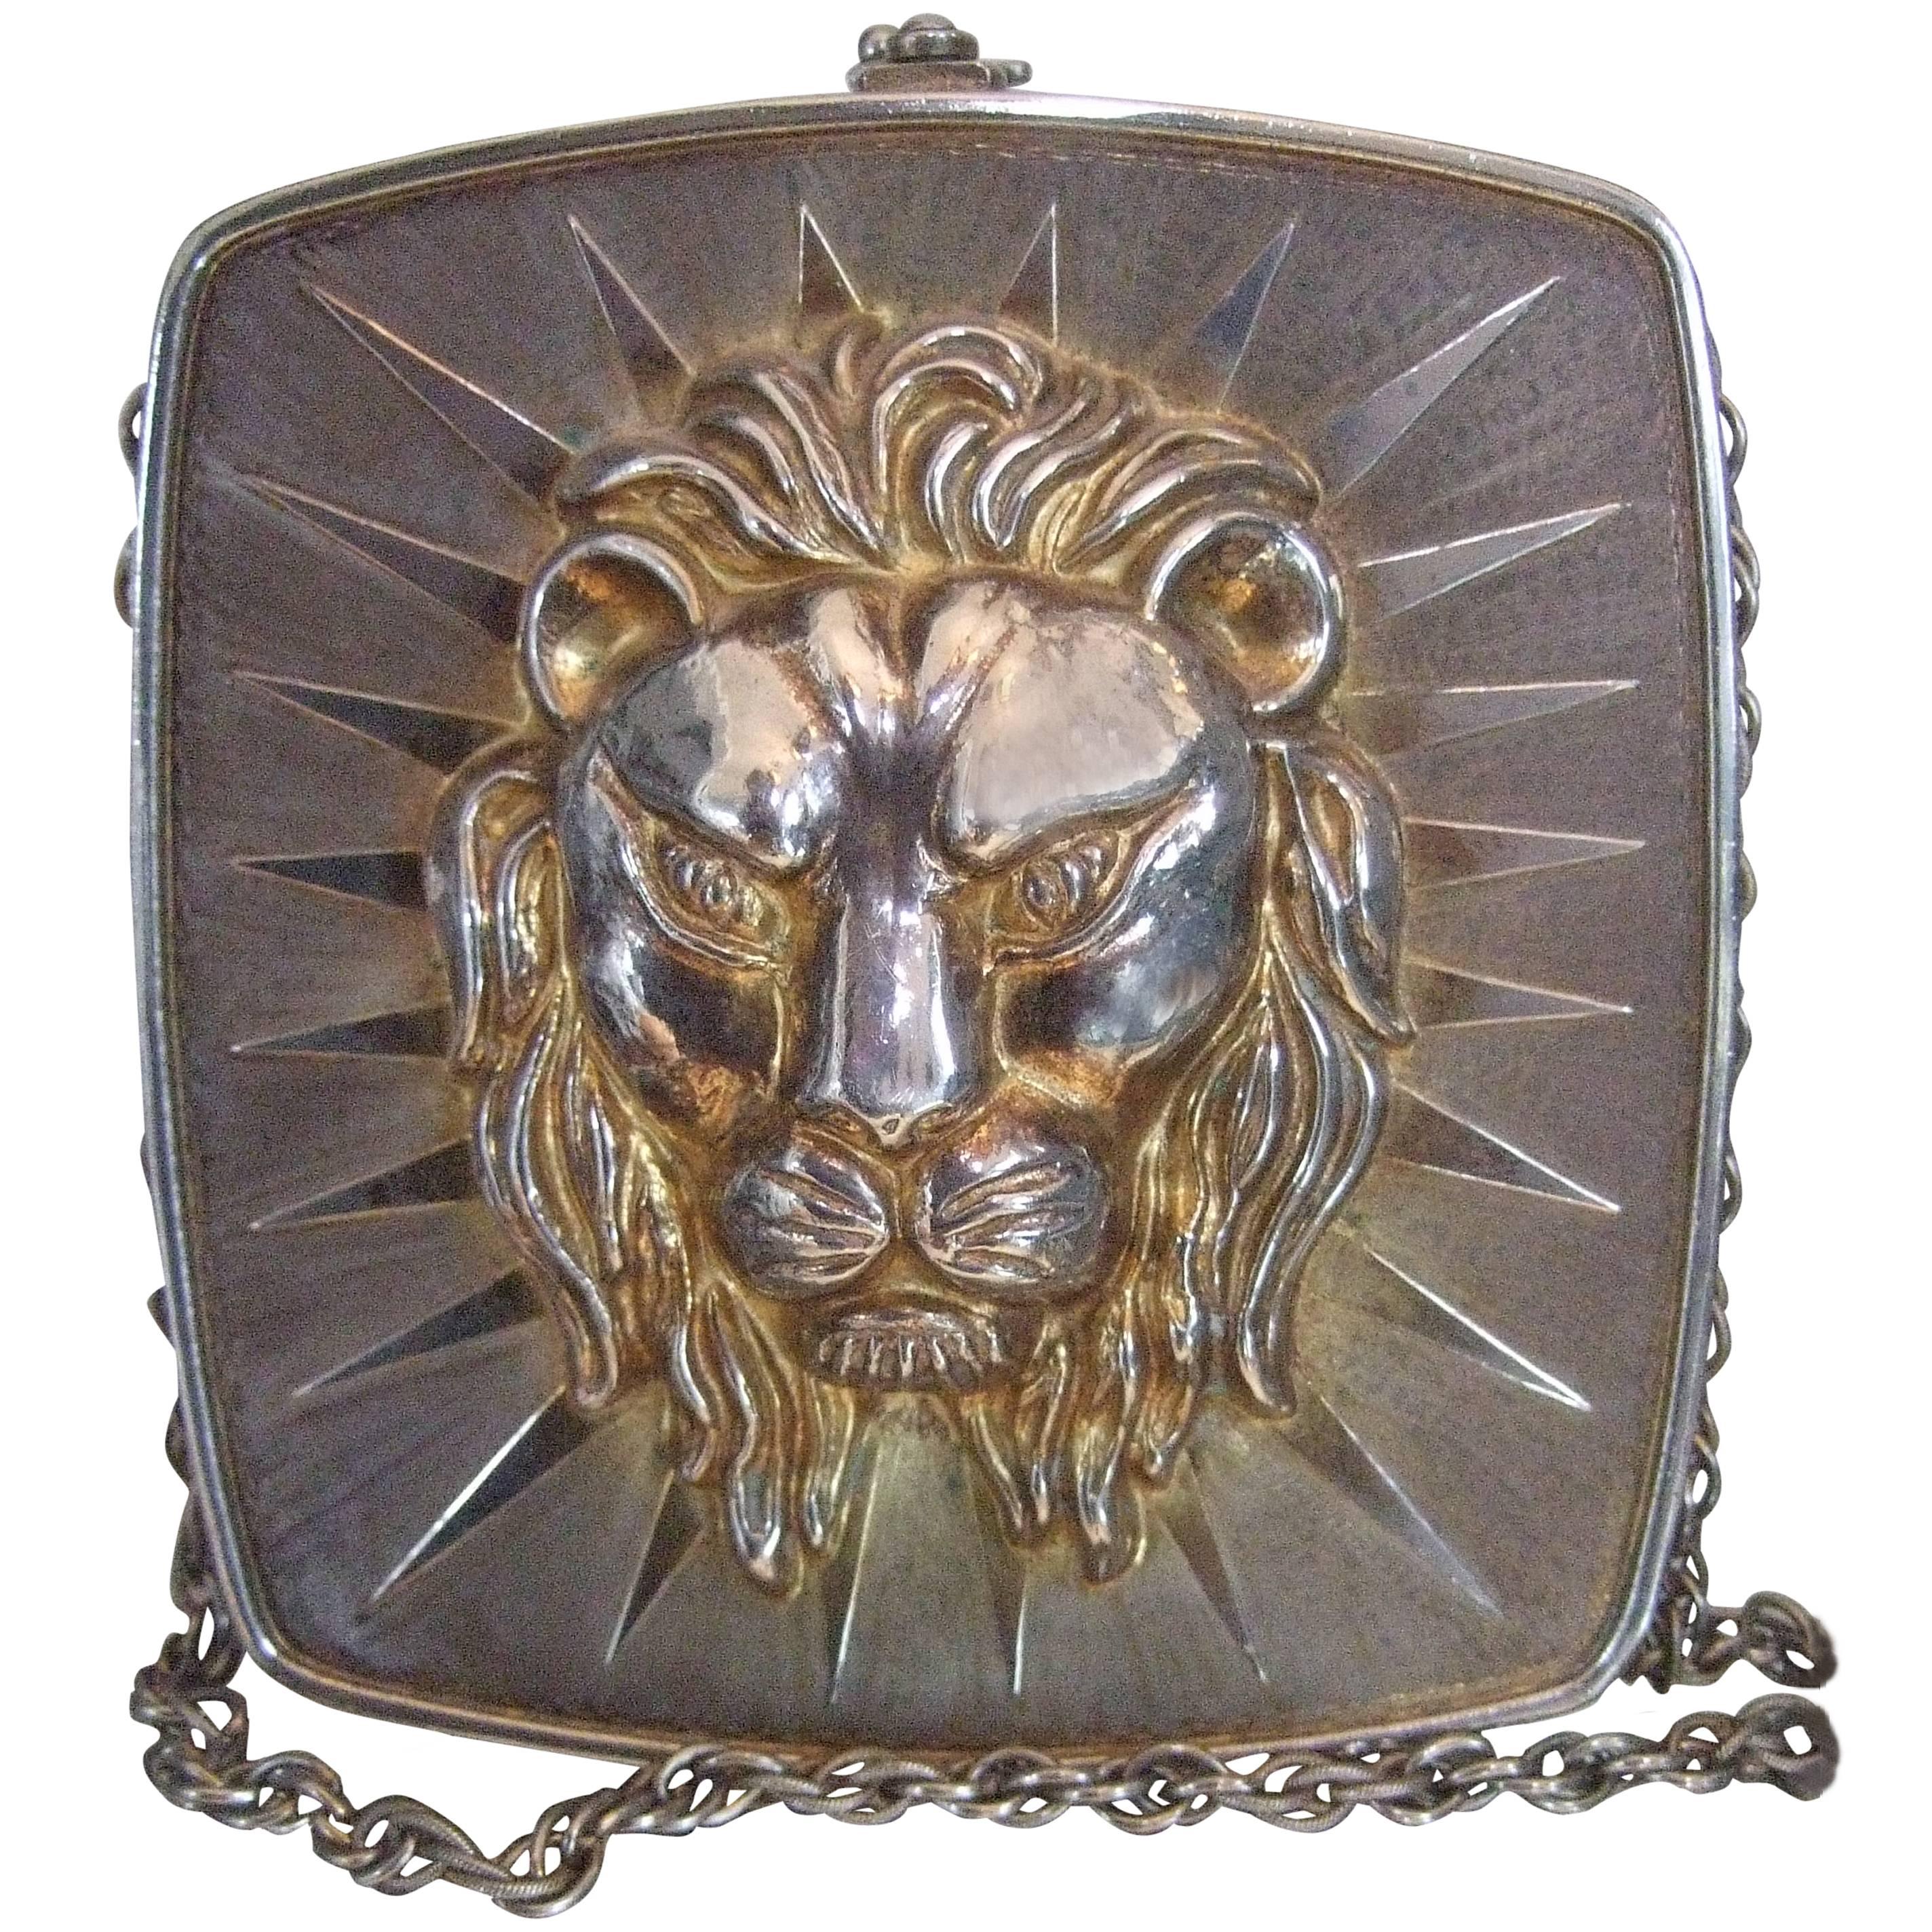 Ornate Metal Lion Emblem Evening Bag Made in Italy c 1970s